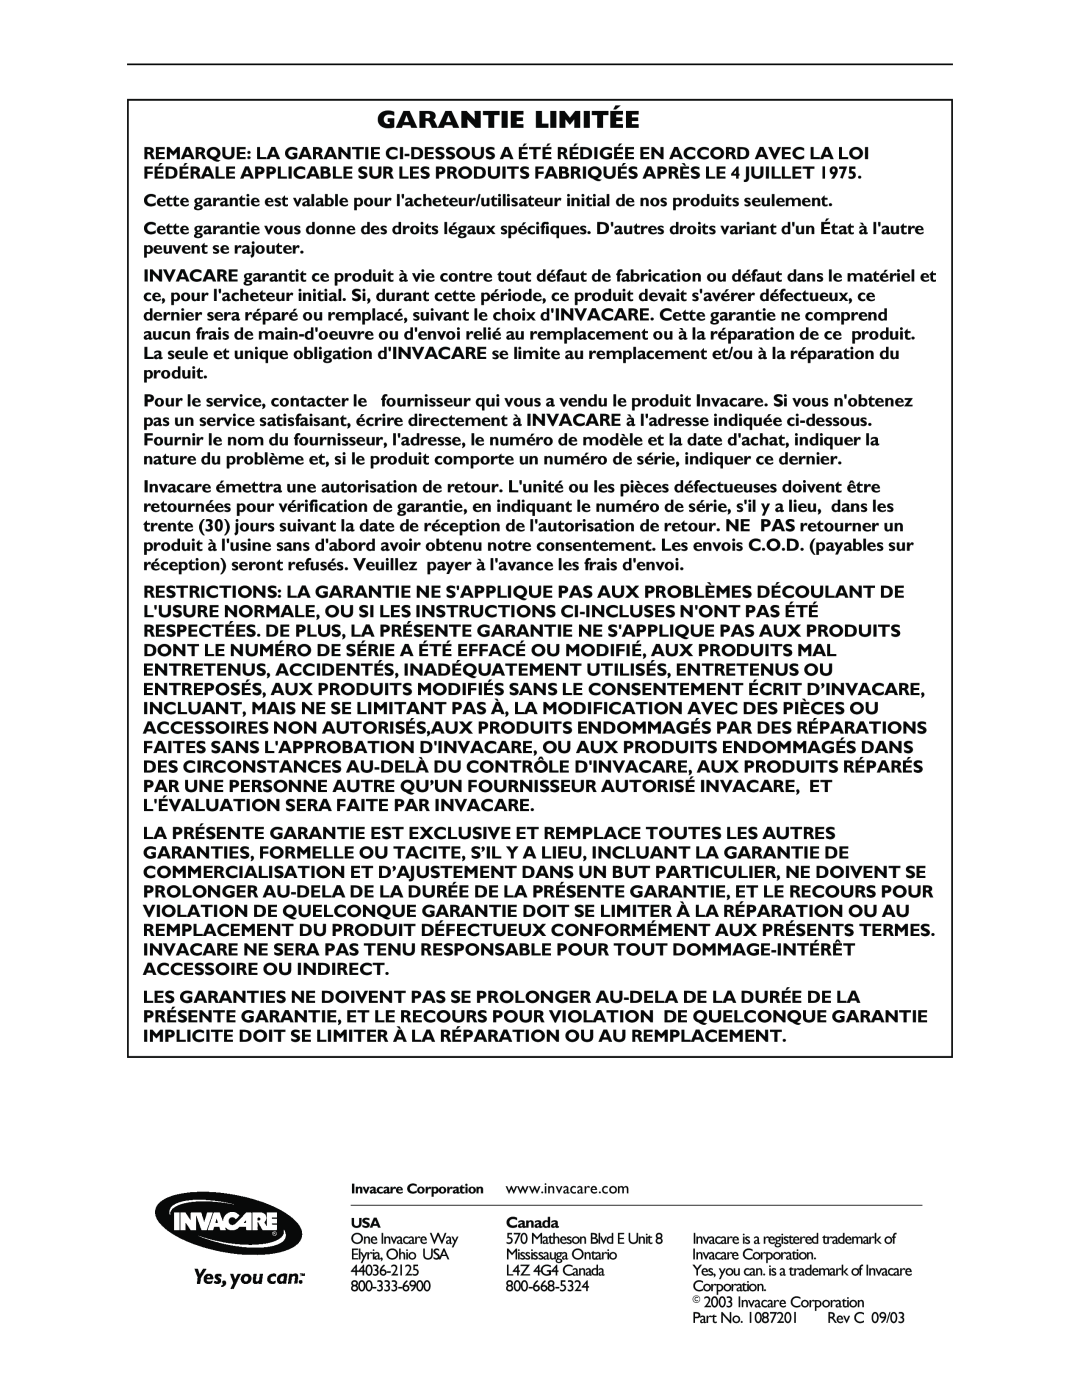 Invacare 705 instruction sheet Garantie Limitée, Canada 